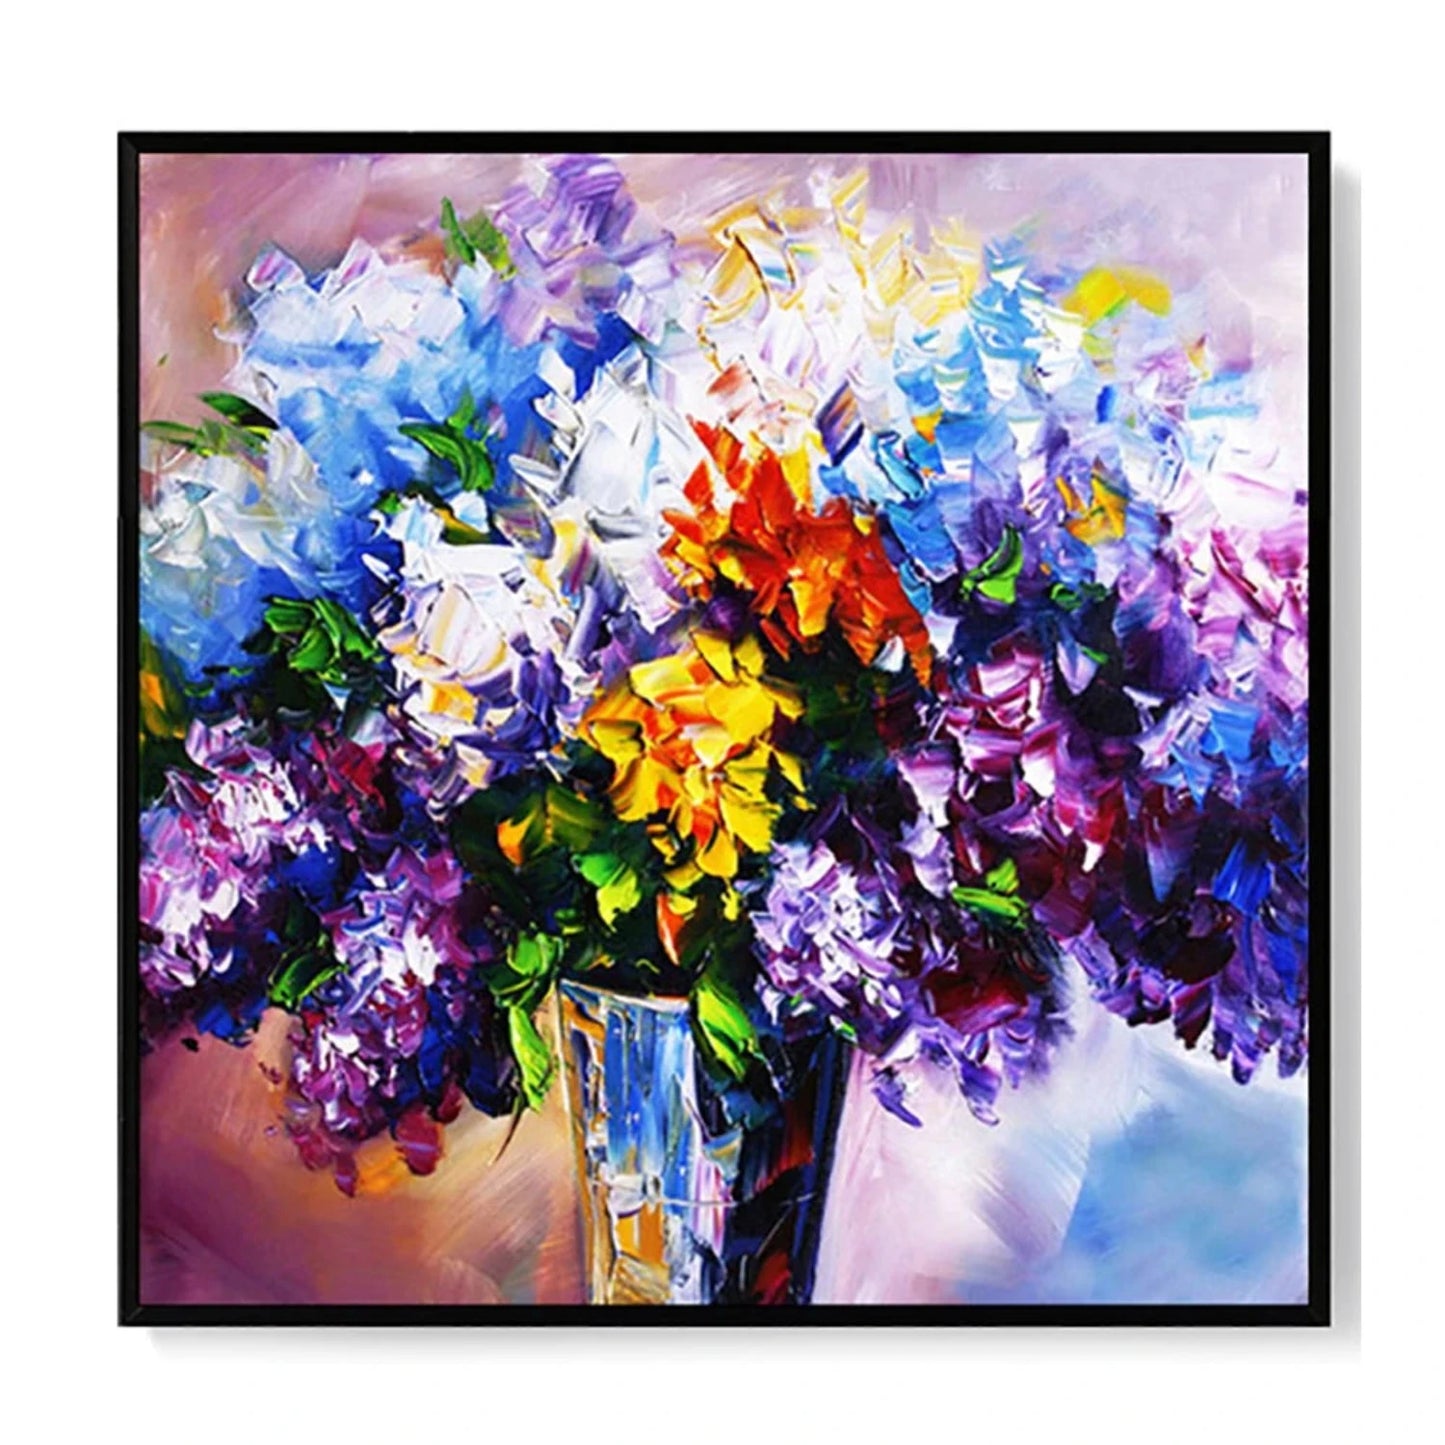 Vivid Colourful Impasto Flowers Textured Modern Painting